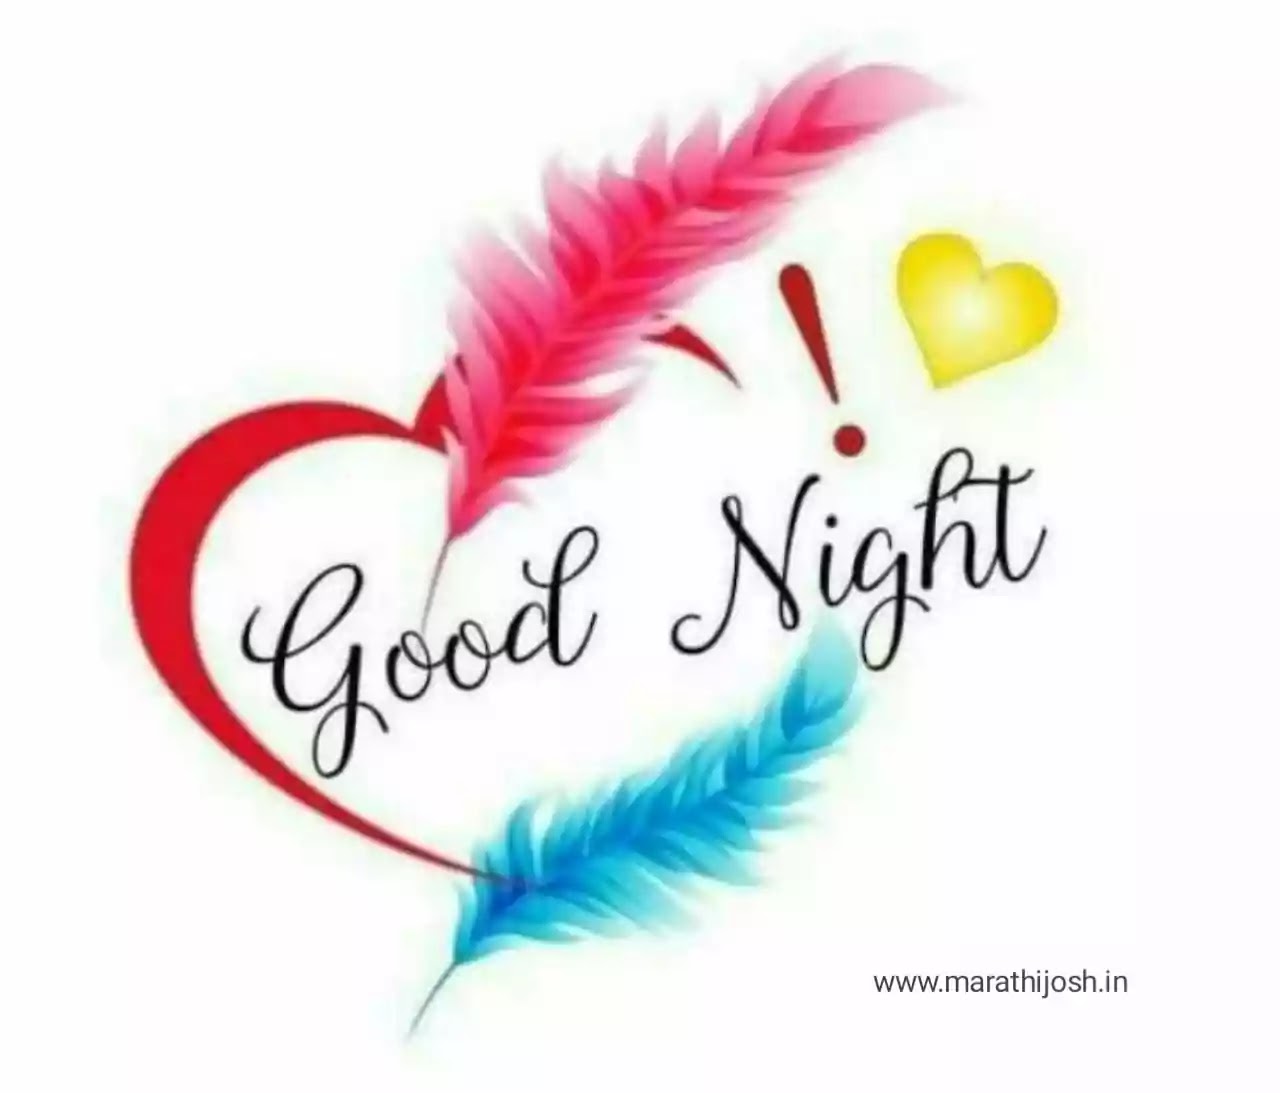 Good Night Images In Marathi